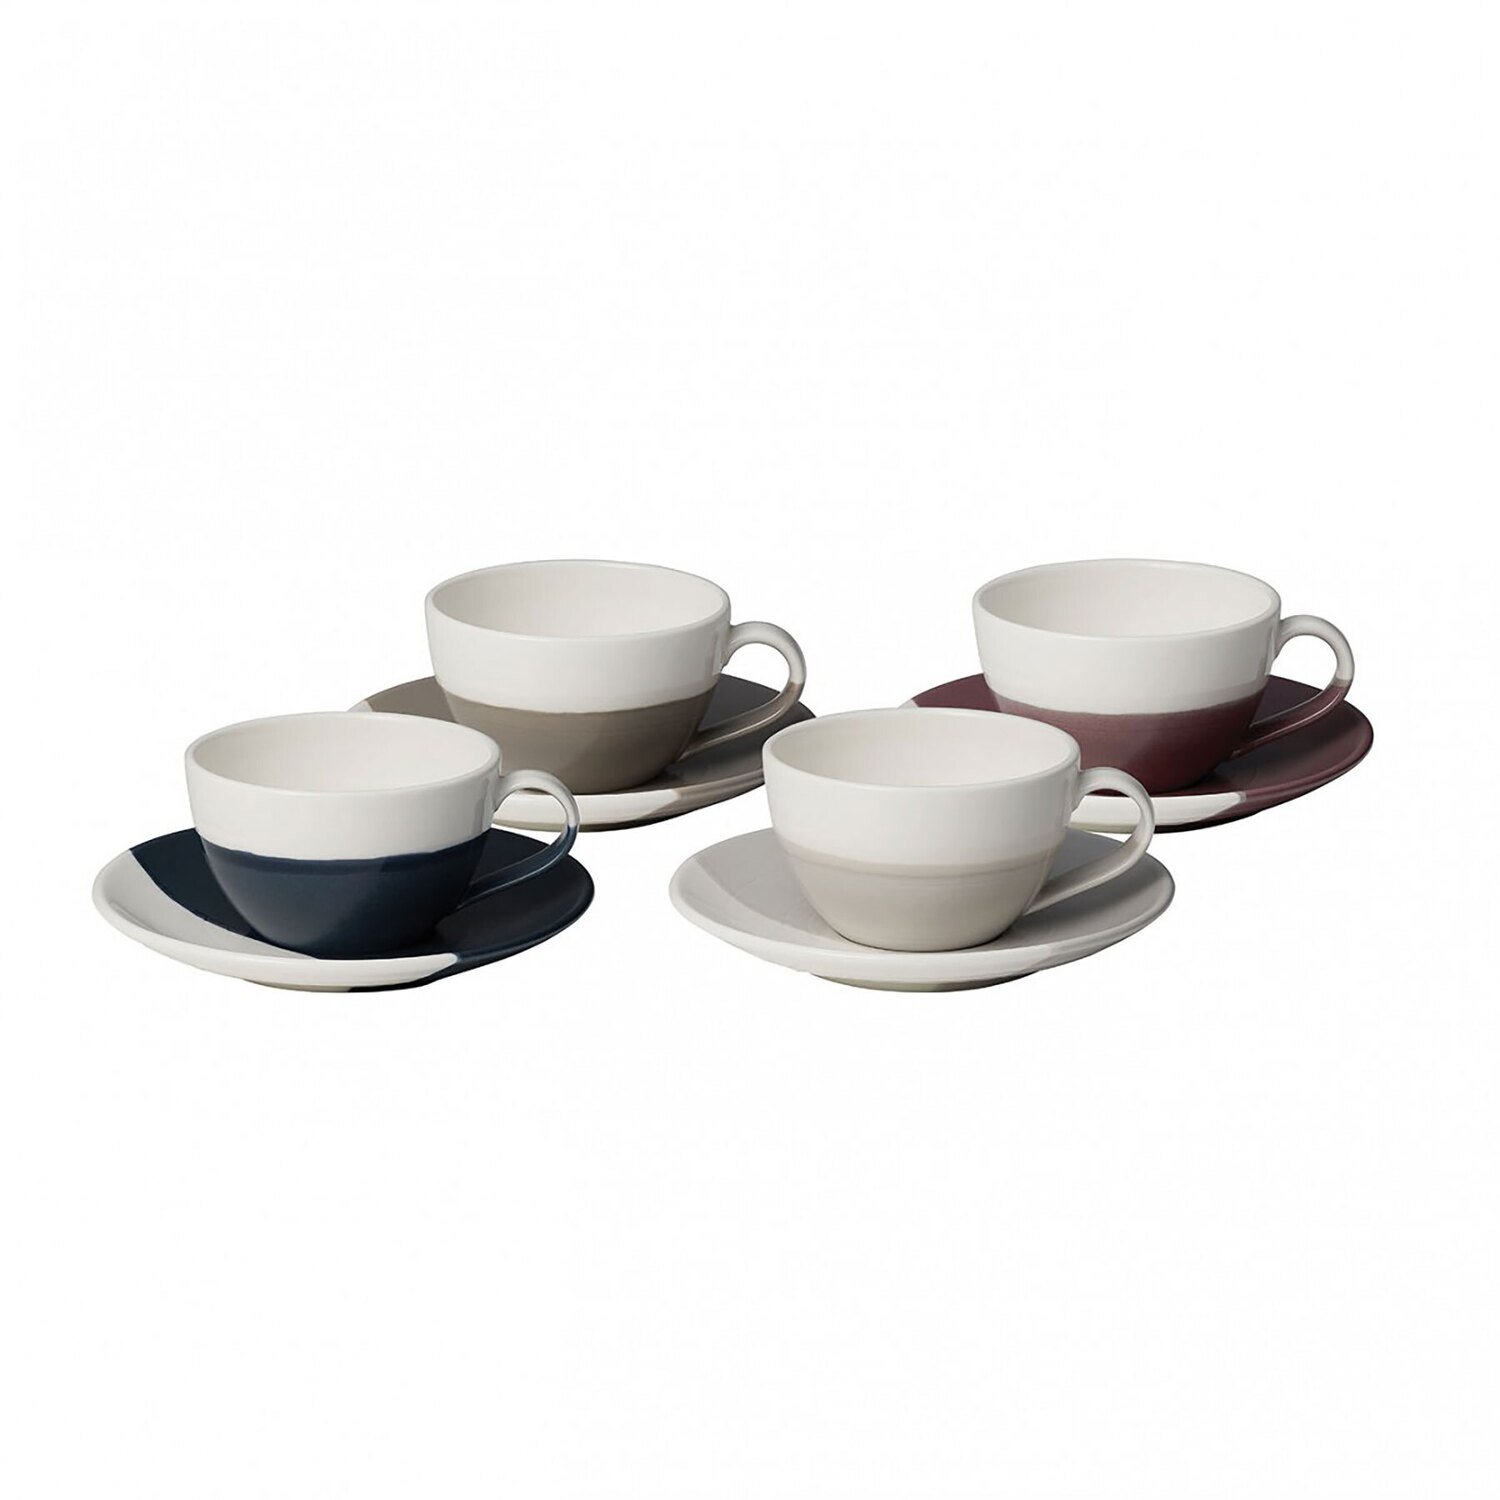 Royal Doulton Coffee Studio Flat White Cup & Saucer 5.6 Oz Set of 4 40035928